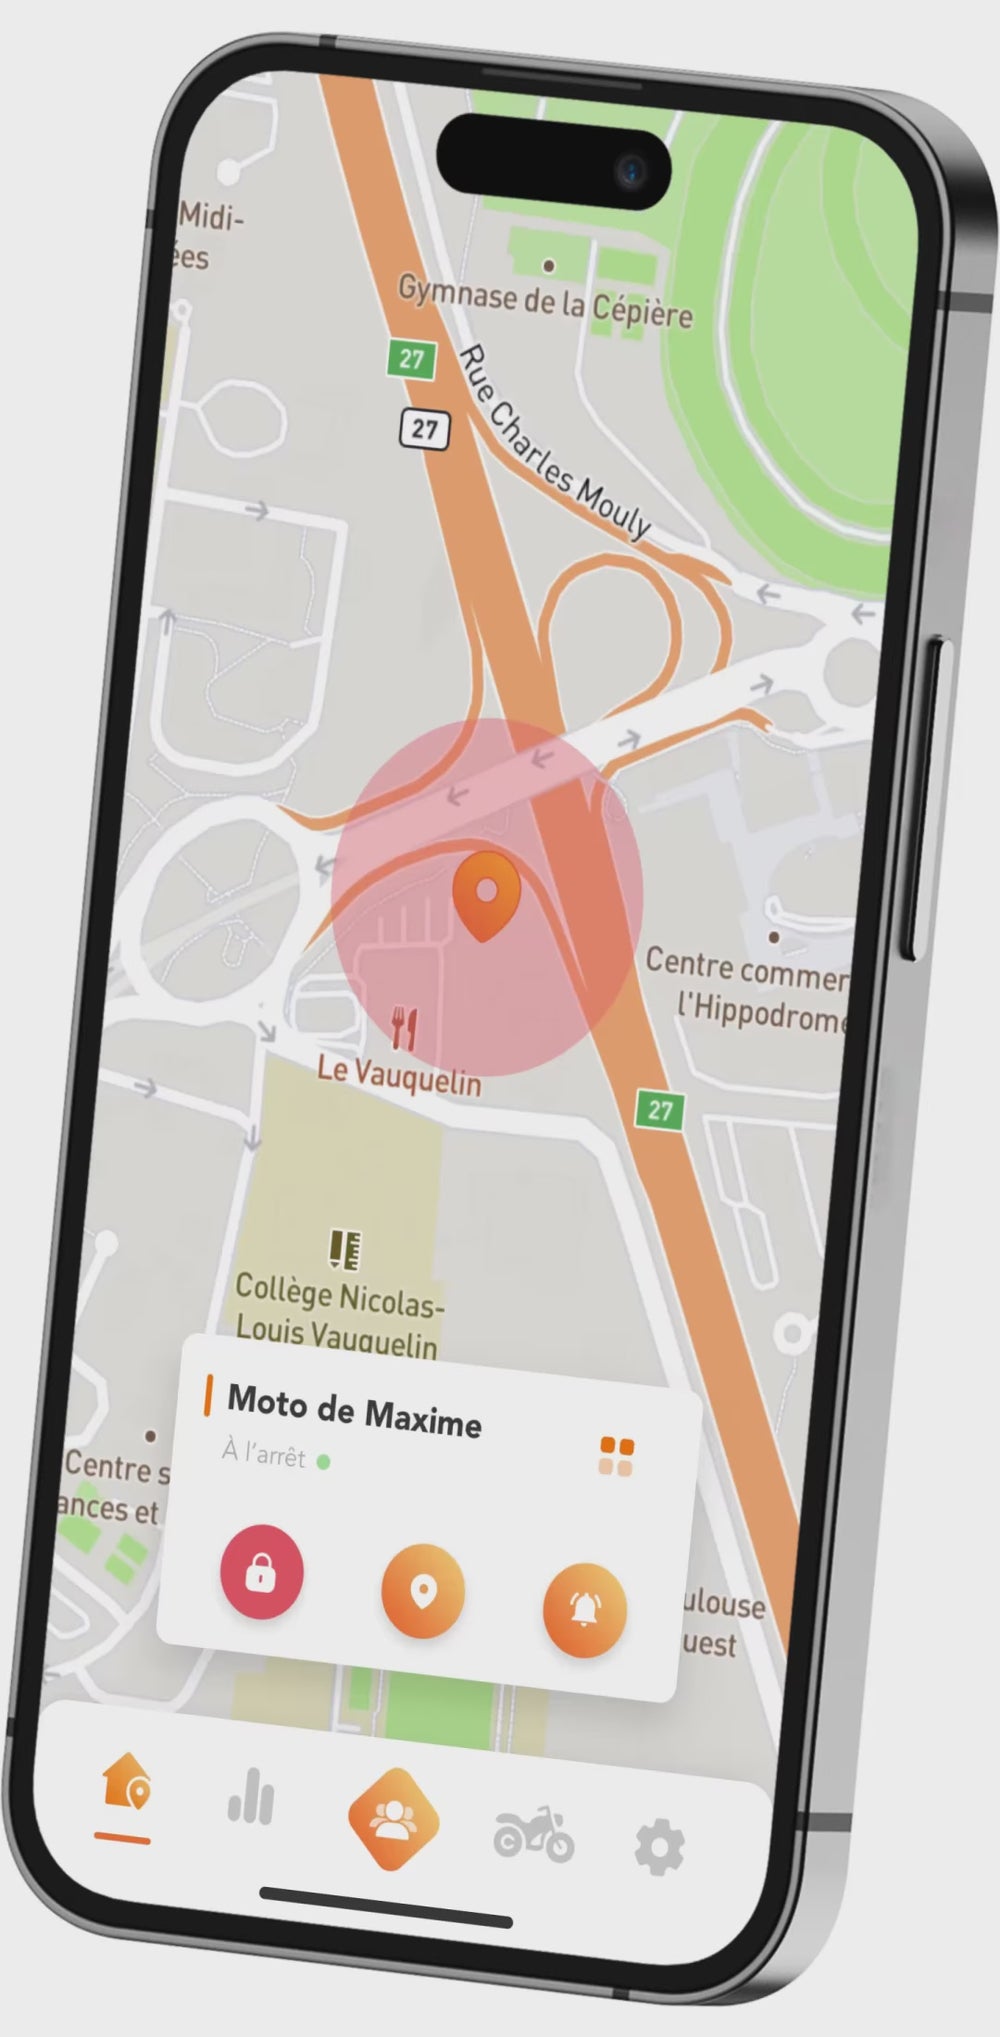 Traceur GPS Alarme GeoRide Mini - GPS / Traceur GPS Moto